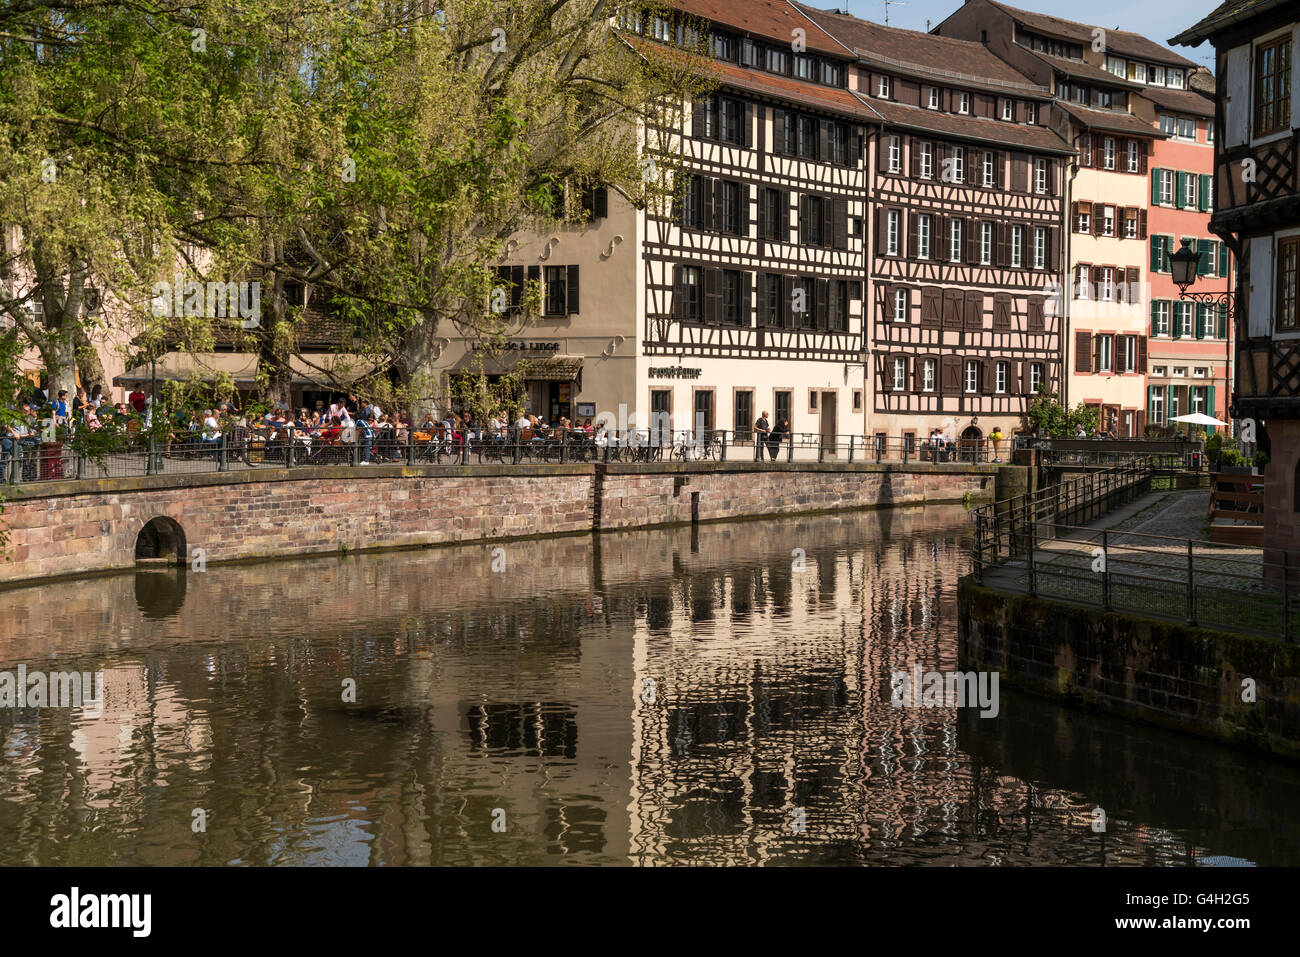 timber-framed homes of the Historic quarter La Petite France, Strasbourg,  Alsace, France Stock Photo